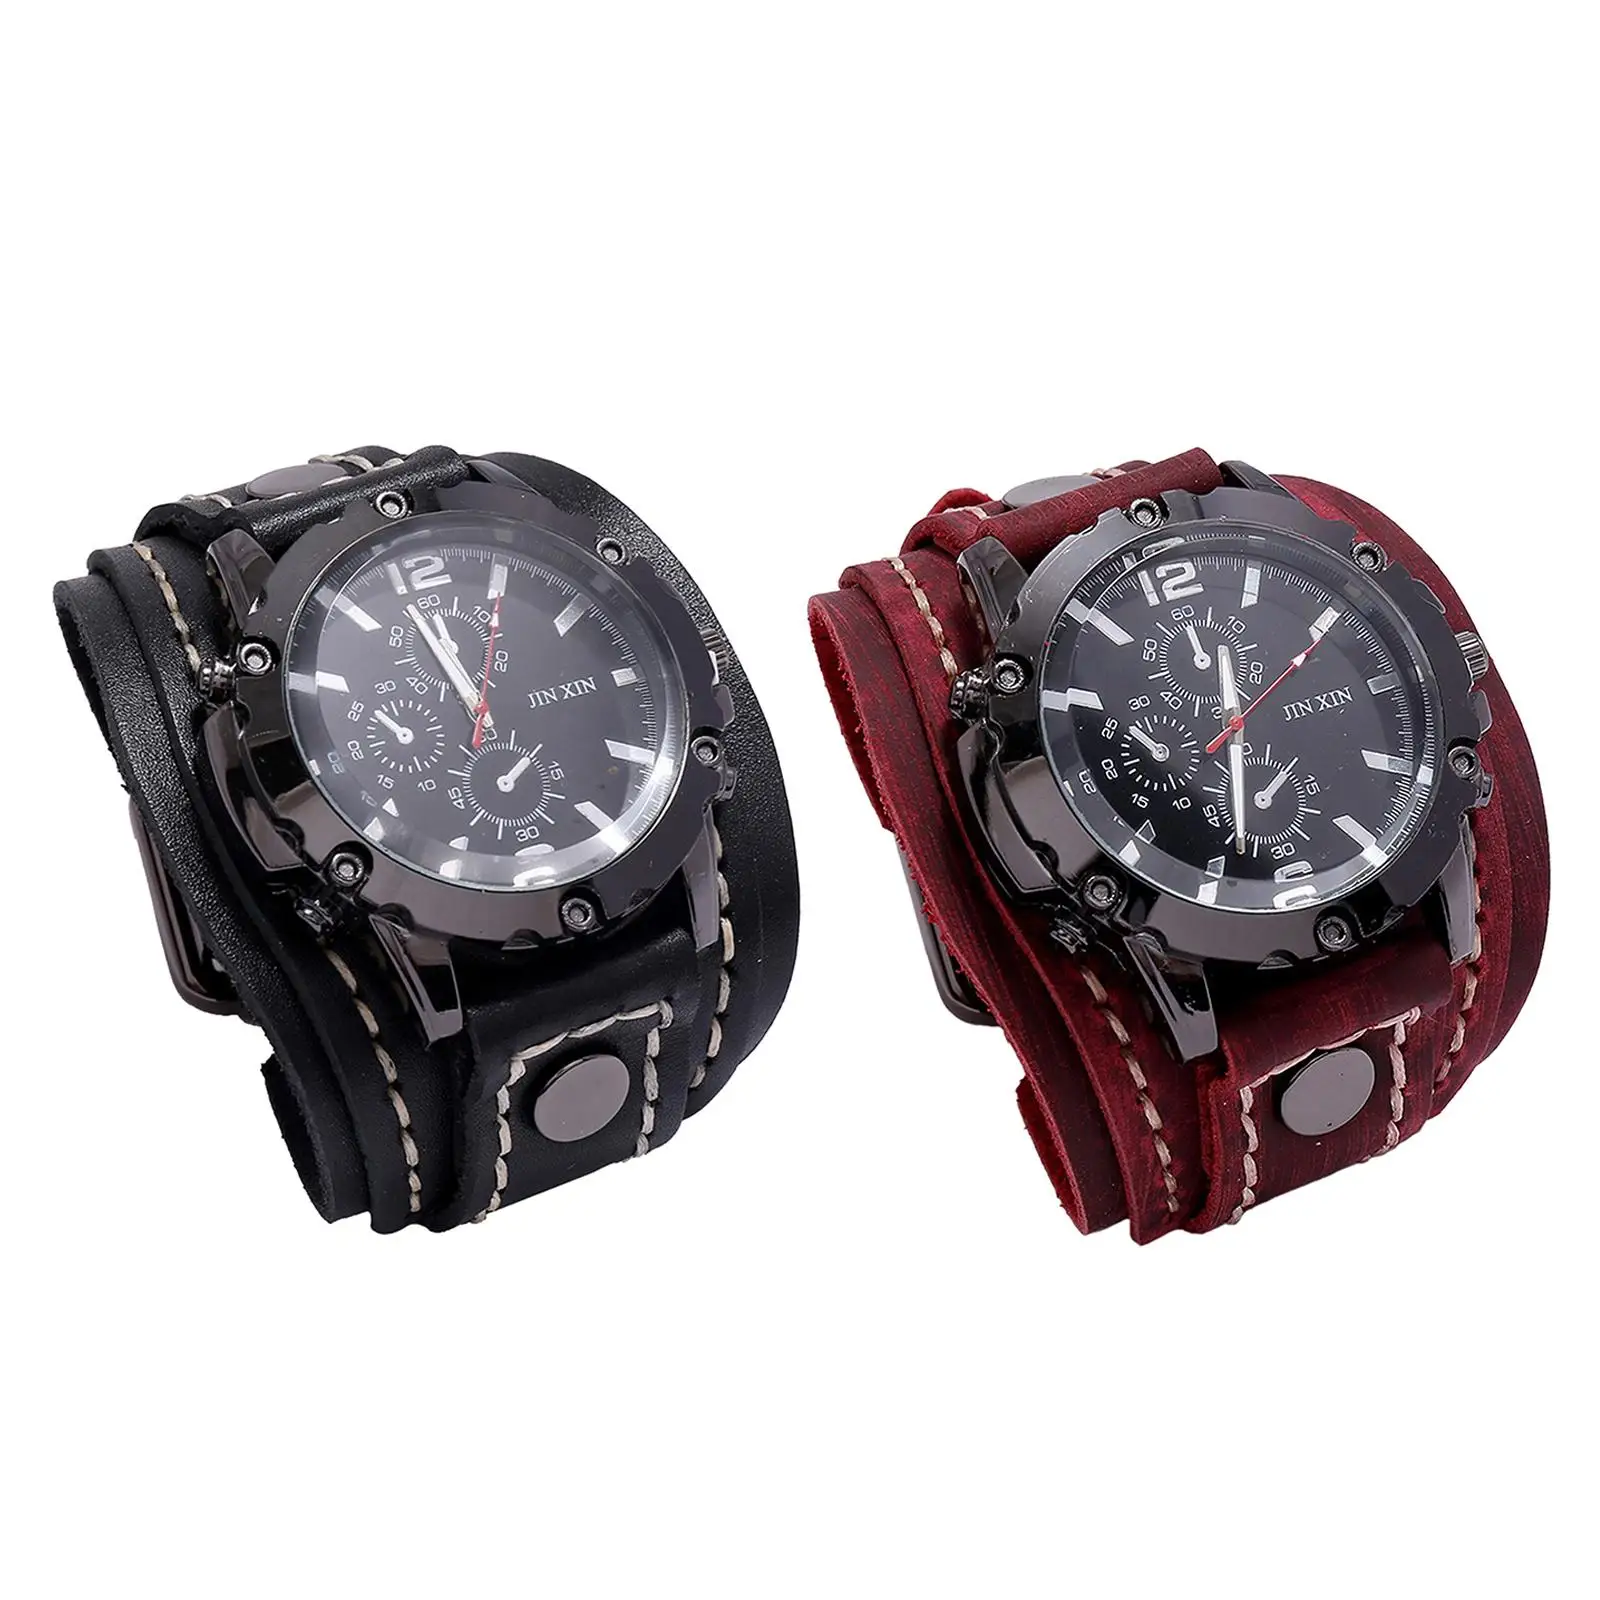 Retro Punk Men Wristwatch Male Watch Bangles Adjustable Leather Strap Watch Band Cuff Hybrid Design Comfortable for Men Male